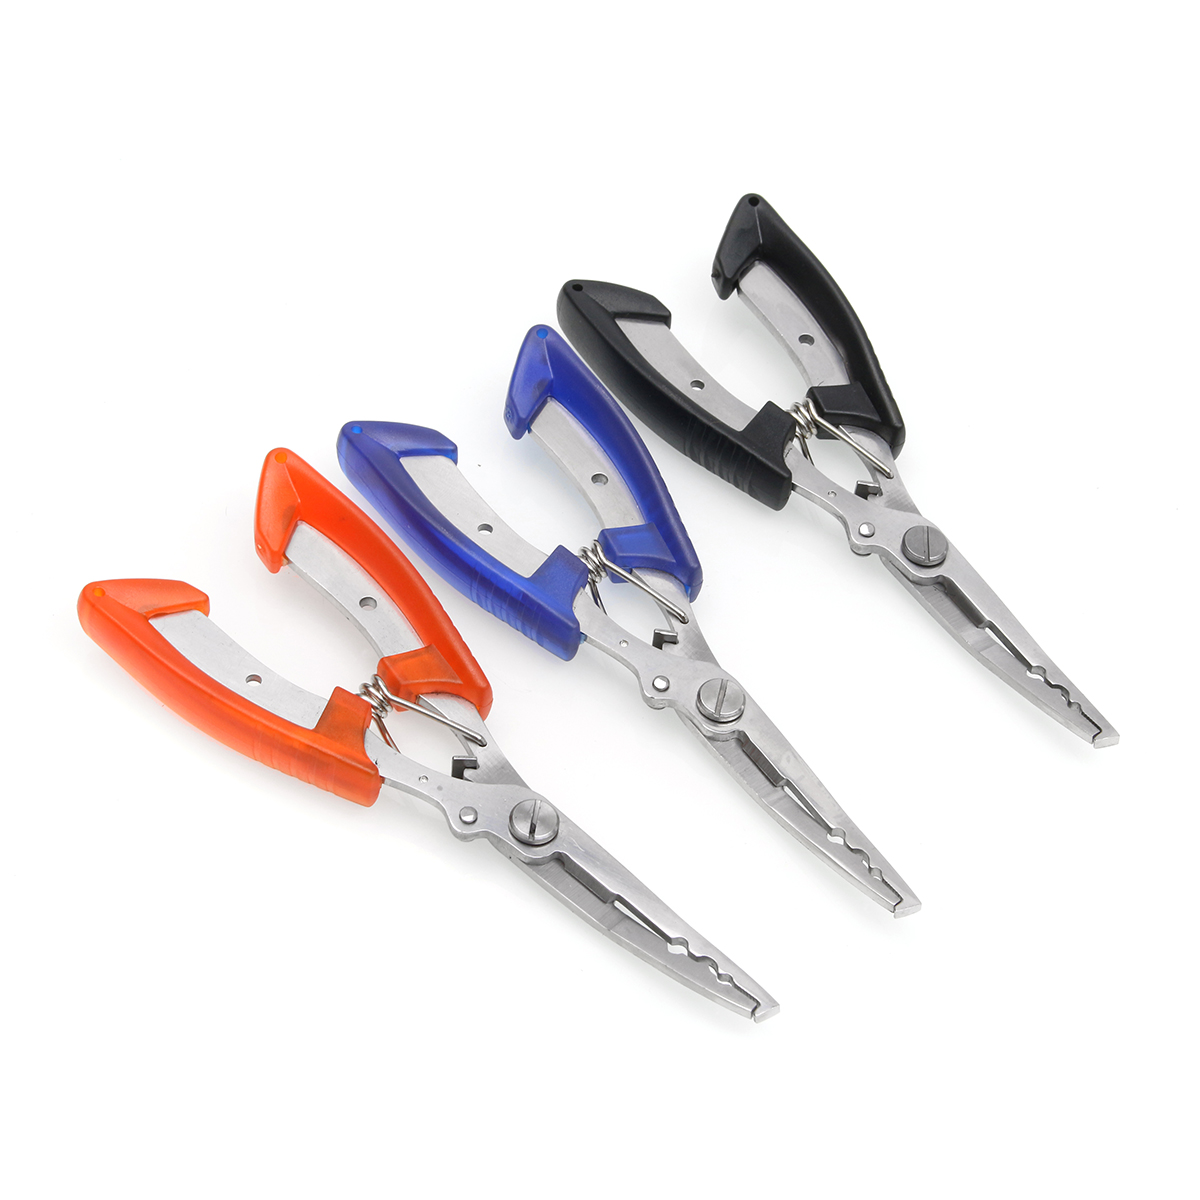 Stainless-Steel-Fishing-Pliers-Plierweiter-Scissors-Line-Cutter-Hook-Tackle-Tool-1151463-2